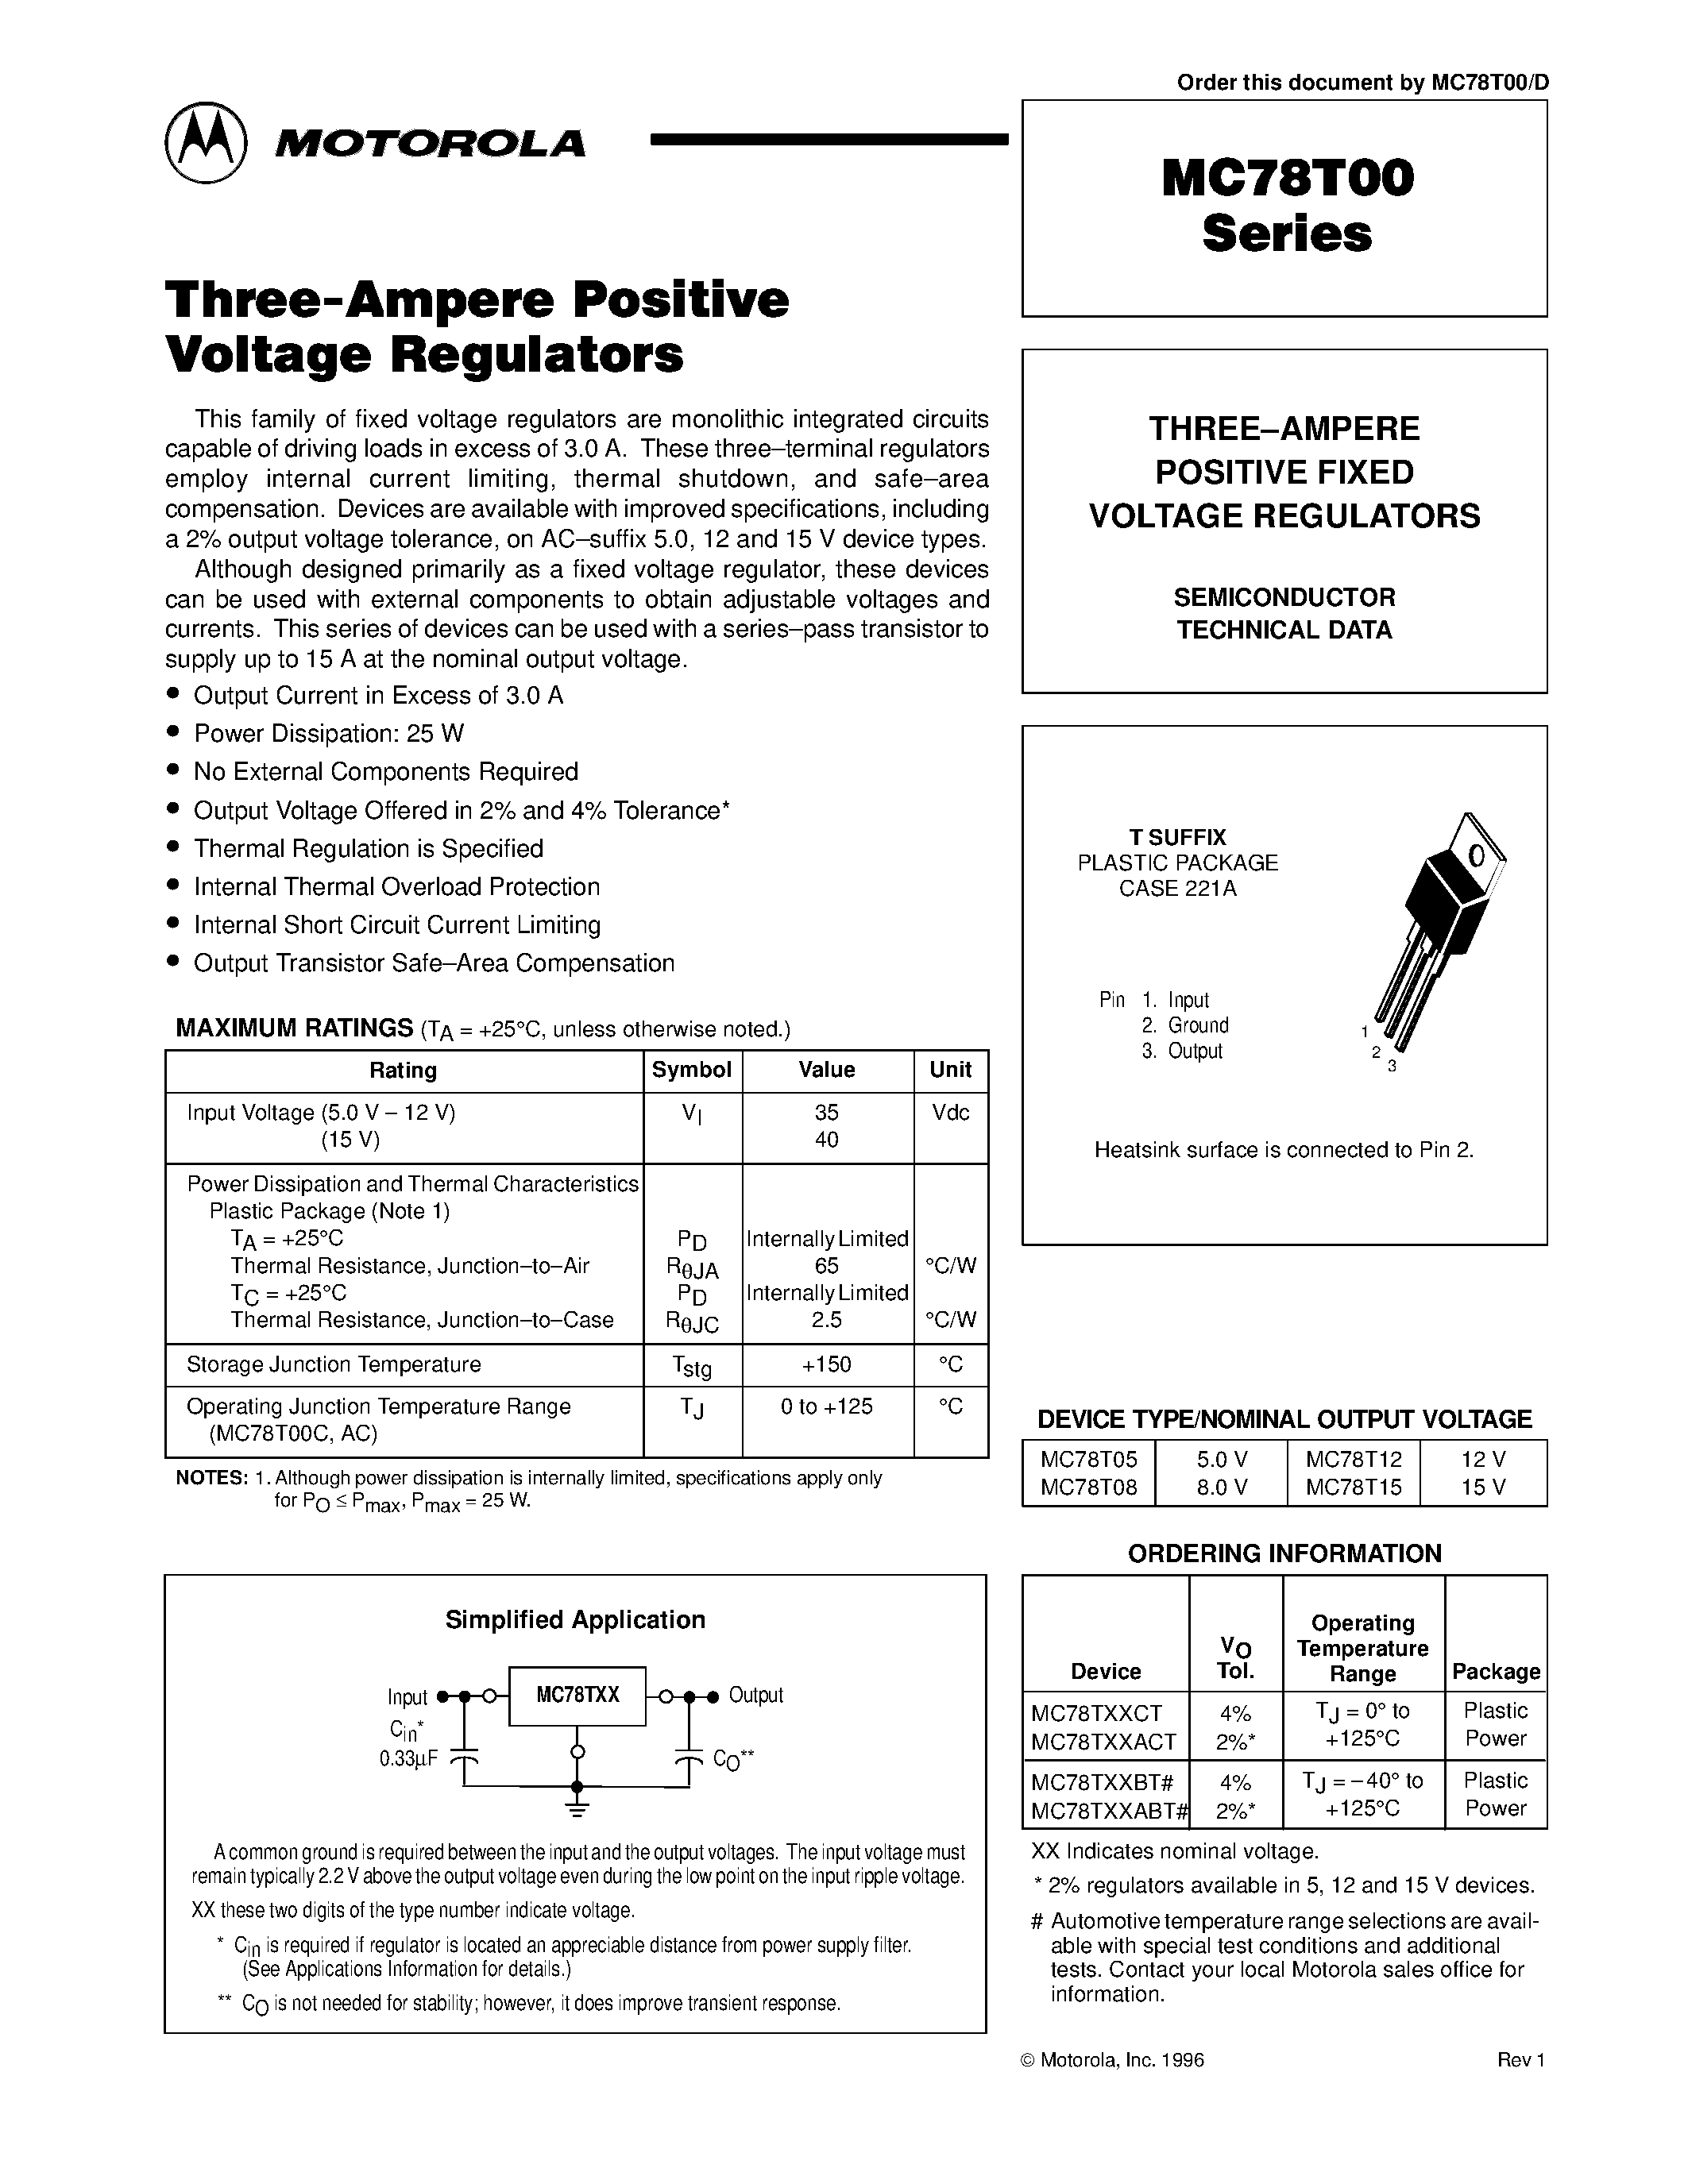 Datasheet MC78T15CT - THREE-AMPERE POSITIVE FIXED VOLTAGE REGULATORS page 1